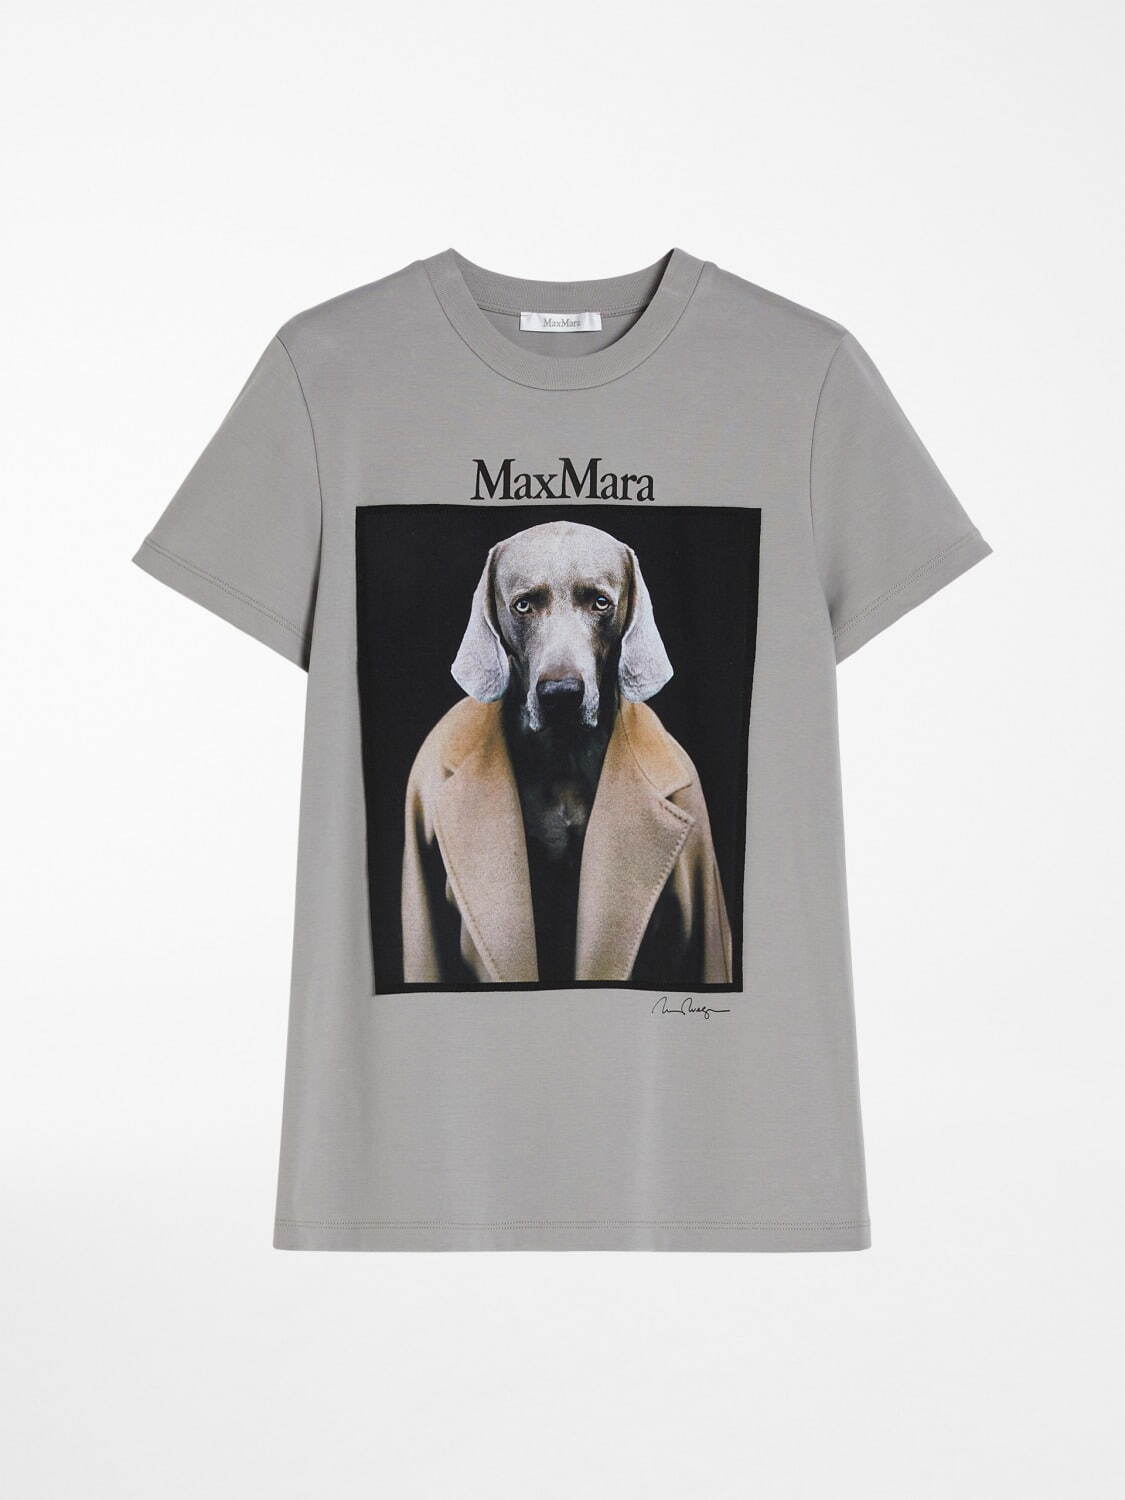 Max Mara   DOG  Tシャツ着丈68cm